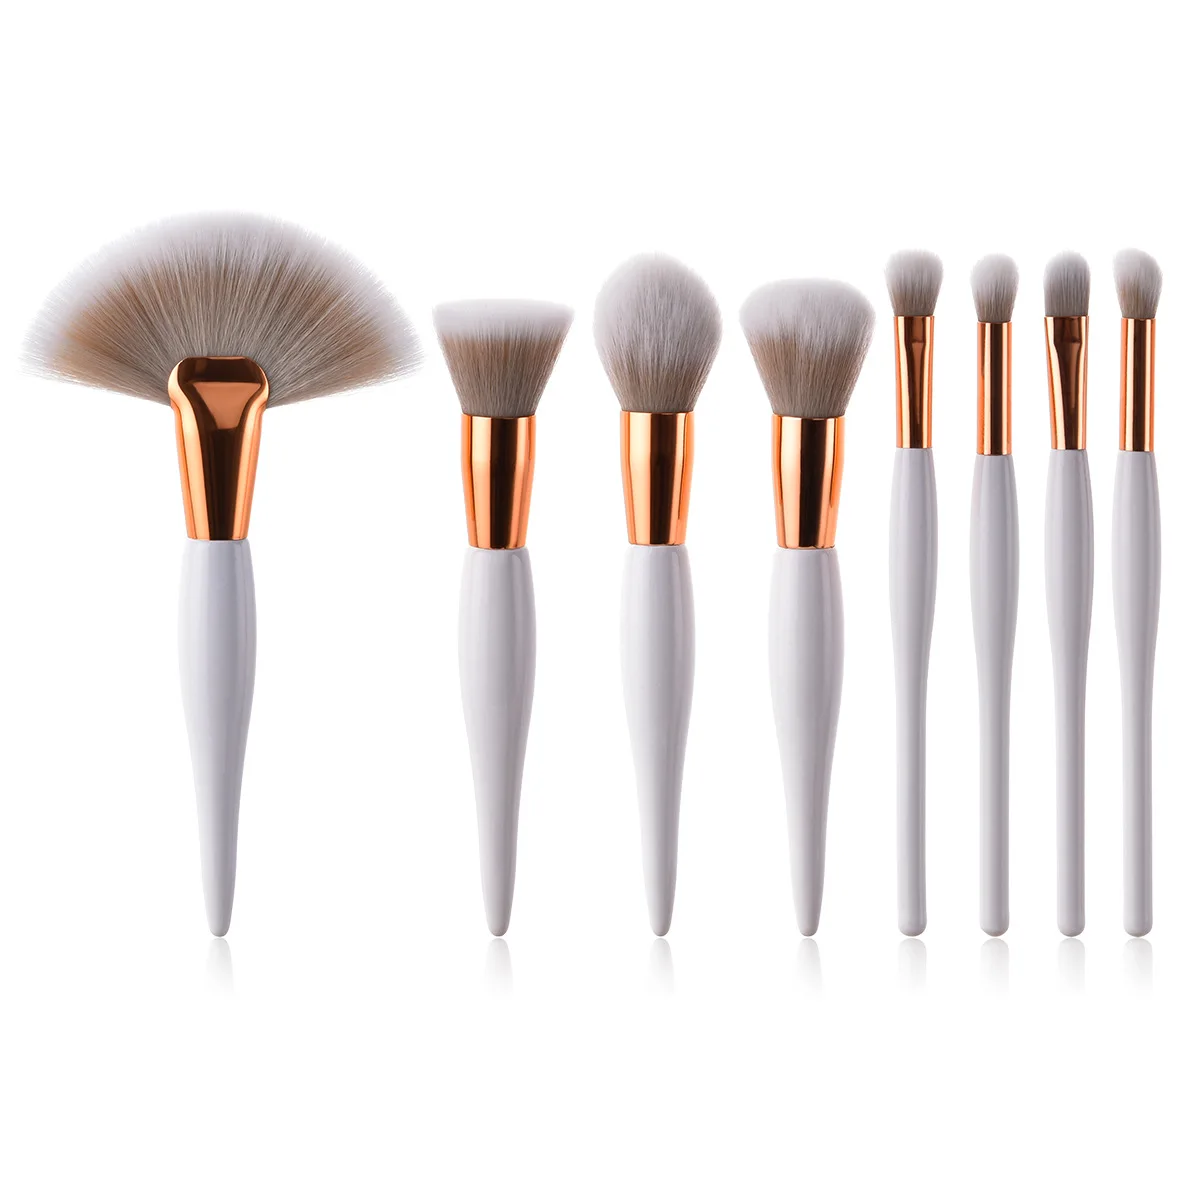 

8PCS/4PCS Professional Makeup Brush Soft Powder Blush Foundation Fan Highlighter Blending Contour Classic Face Make Up Brushes